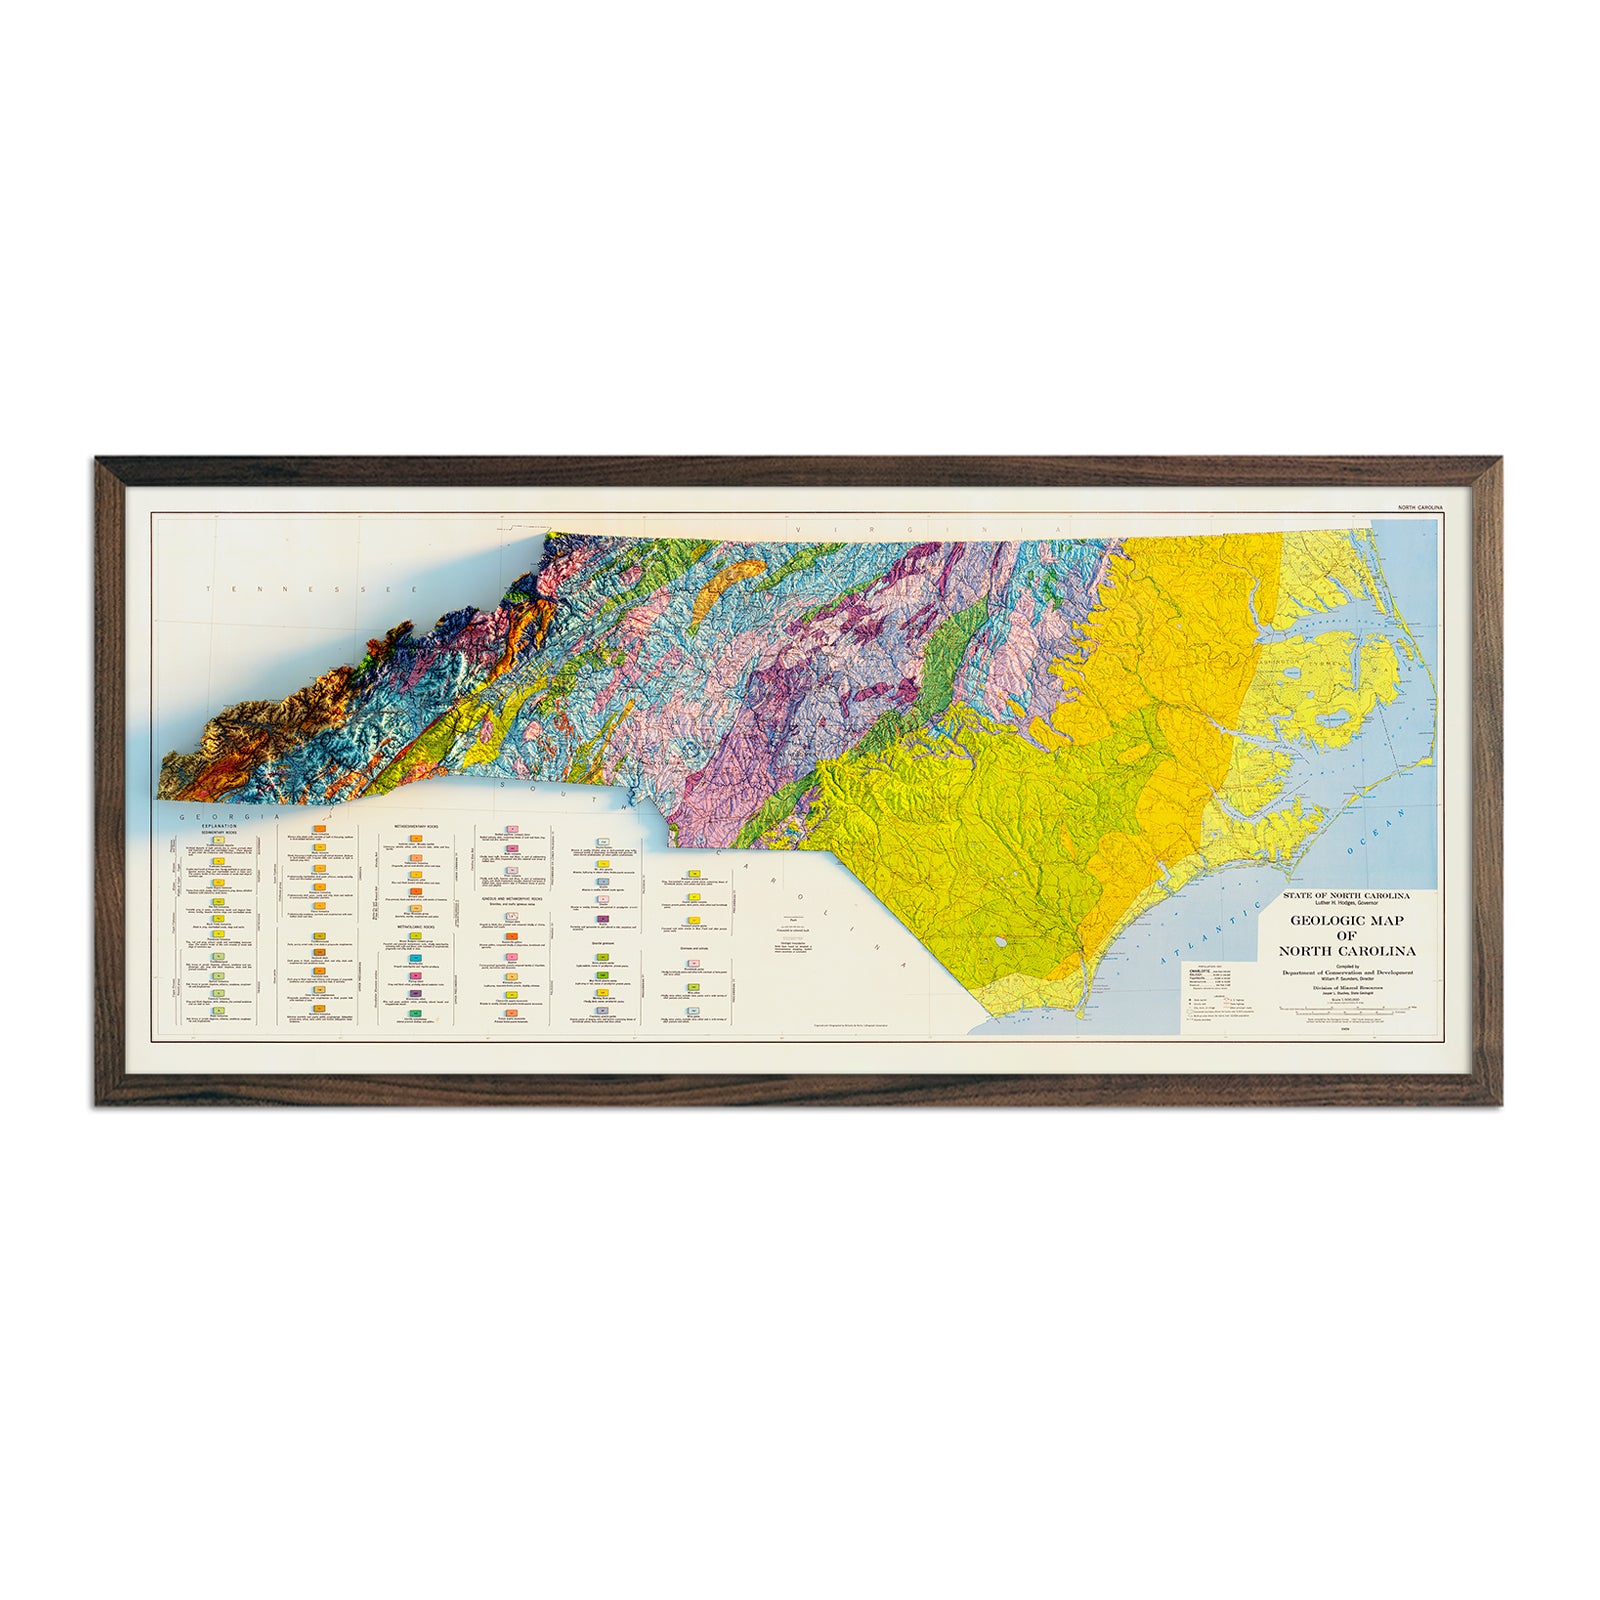 North Carolina Relief Map - 1958